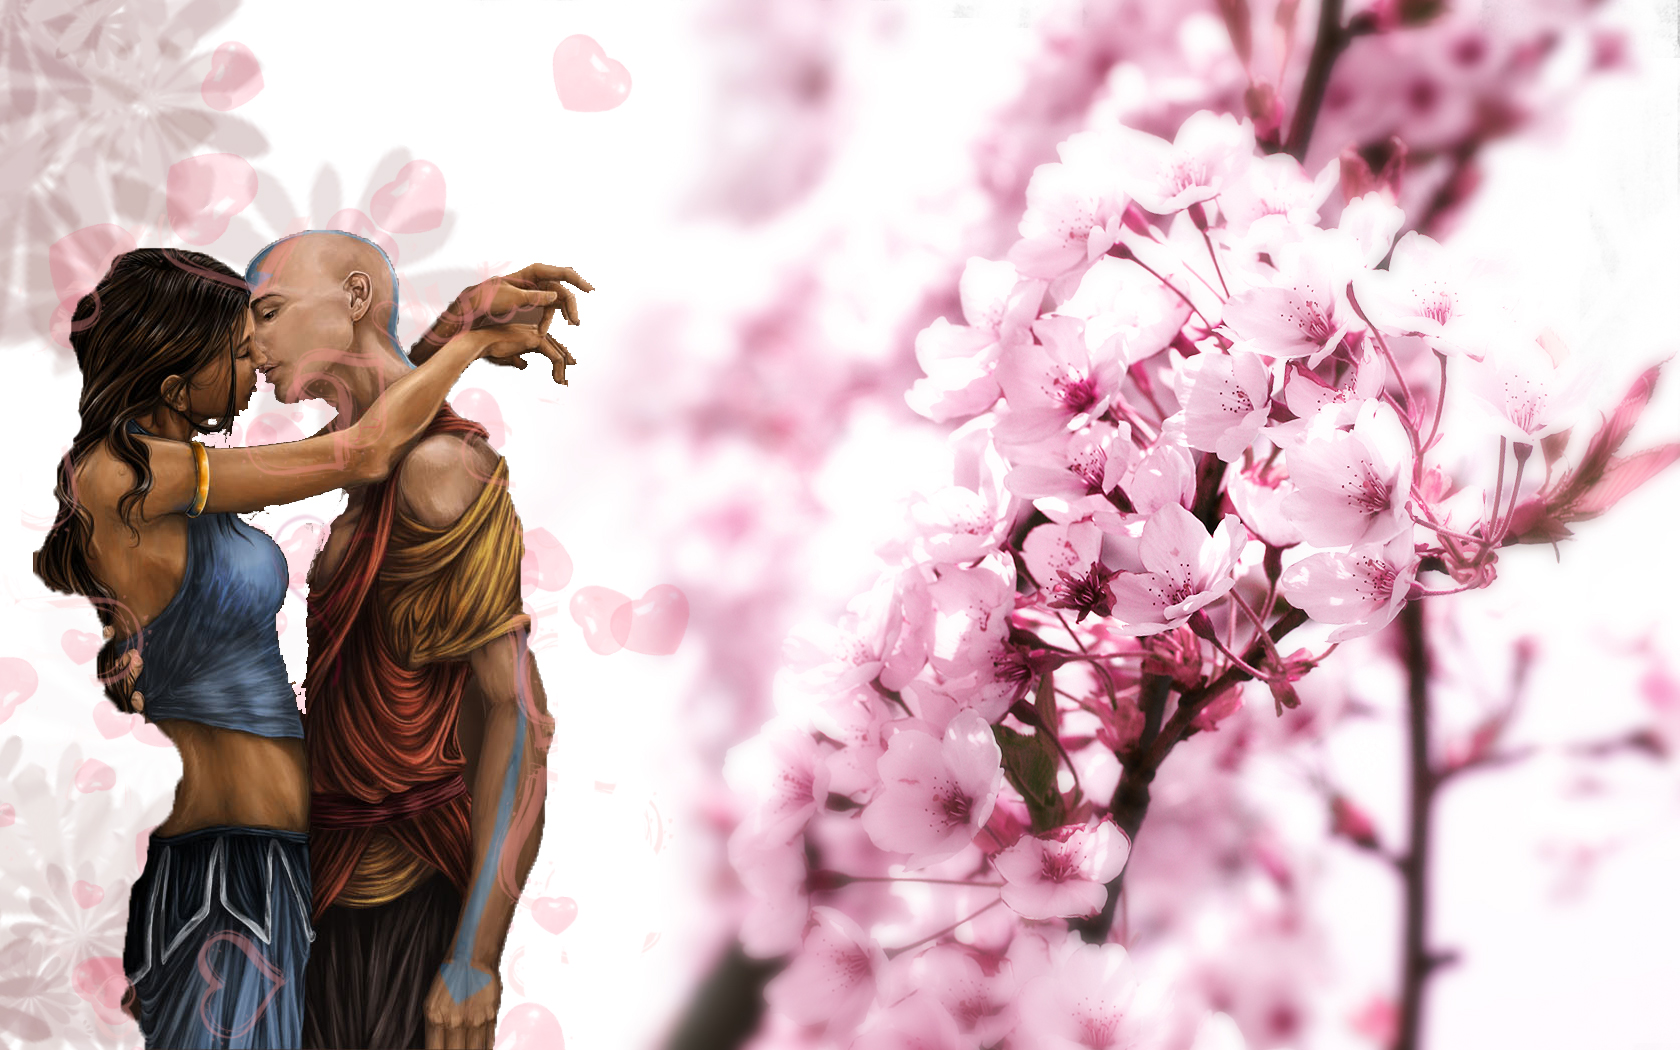 Avatar Love: HD desktop wallpaper featuring Aang and Katara from The Last Airbender.